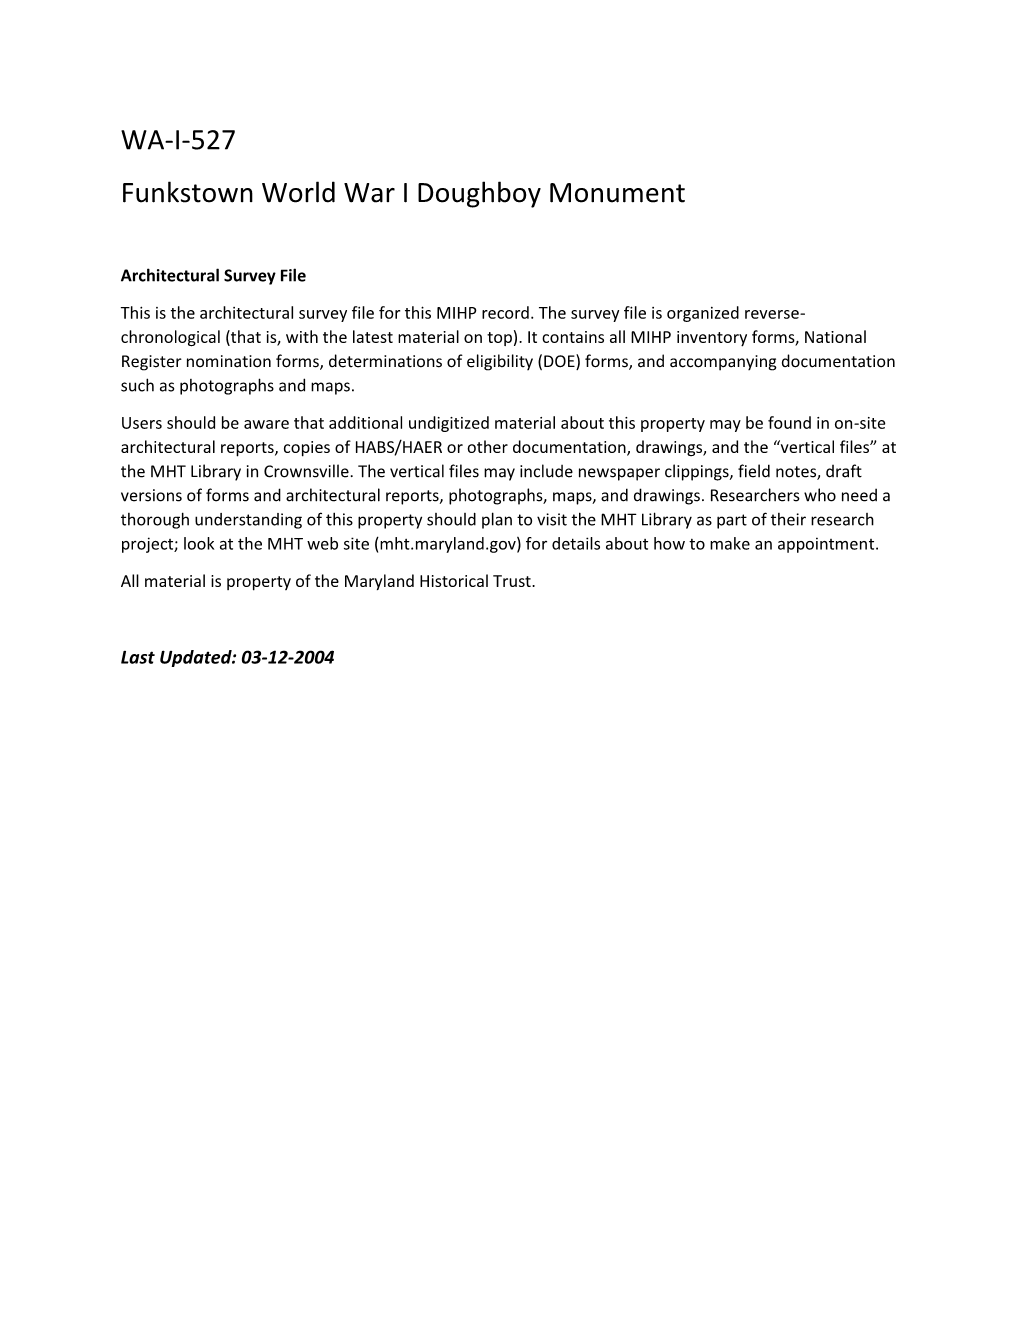 WA-I-527 Funkstown World War I Doughboy Monument